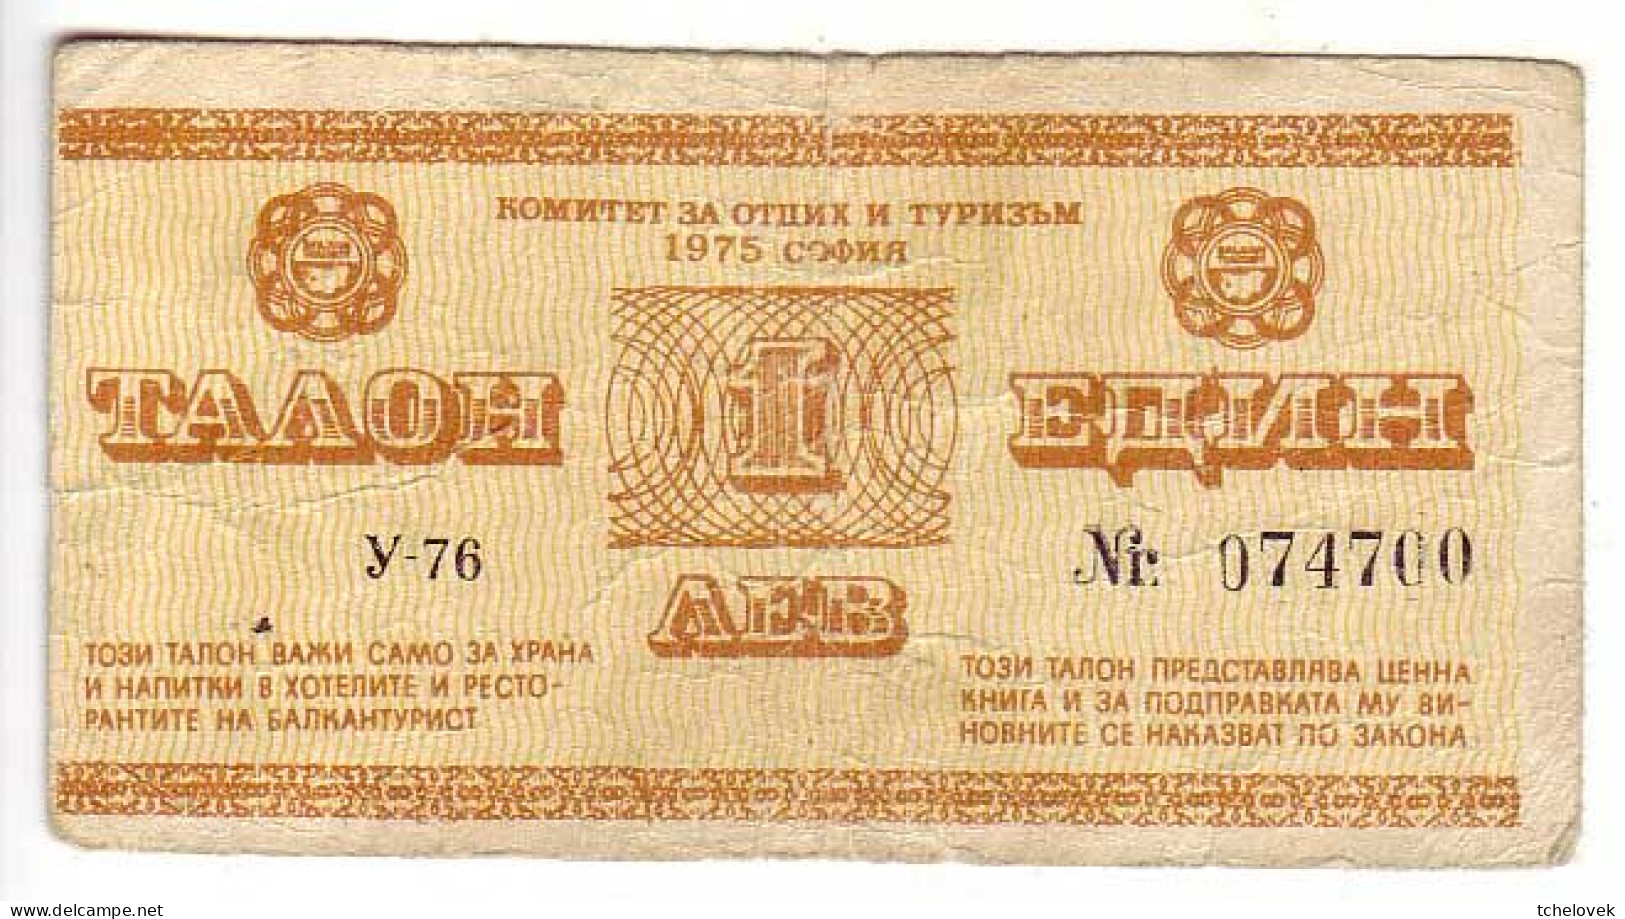 (Billets). Bulgarie Bulgaria. Foreing Exchange Certificate. Balkan Tourist. 1975. 1 Lev Ou-76 N° 074700 Fancy Number - Bulgaria